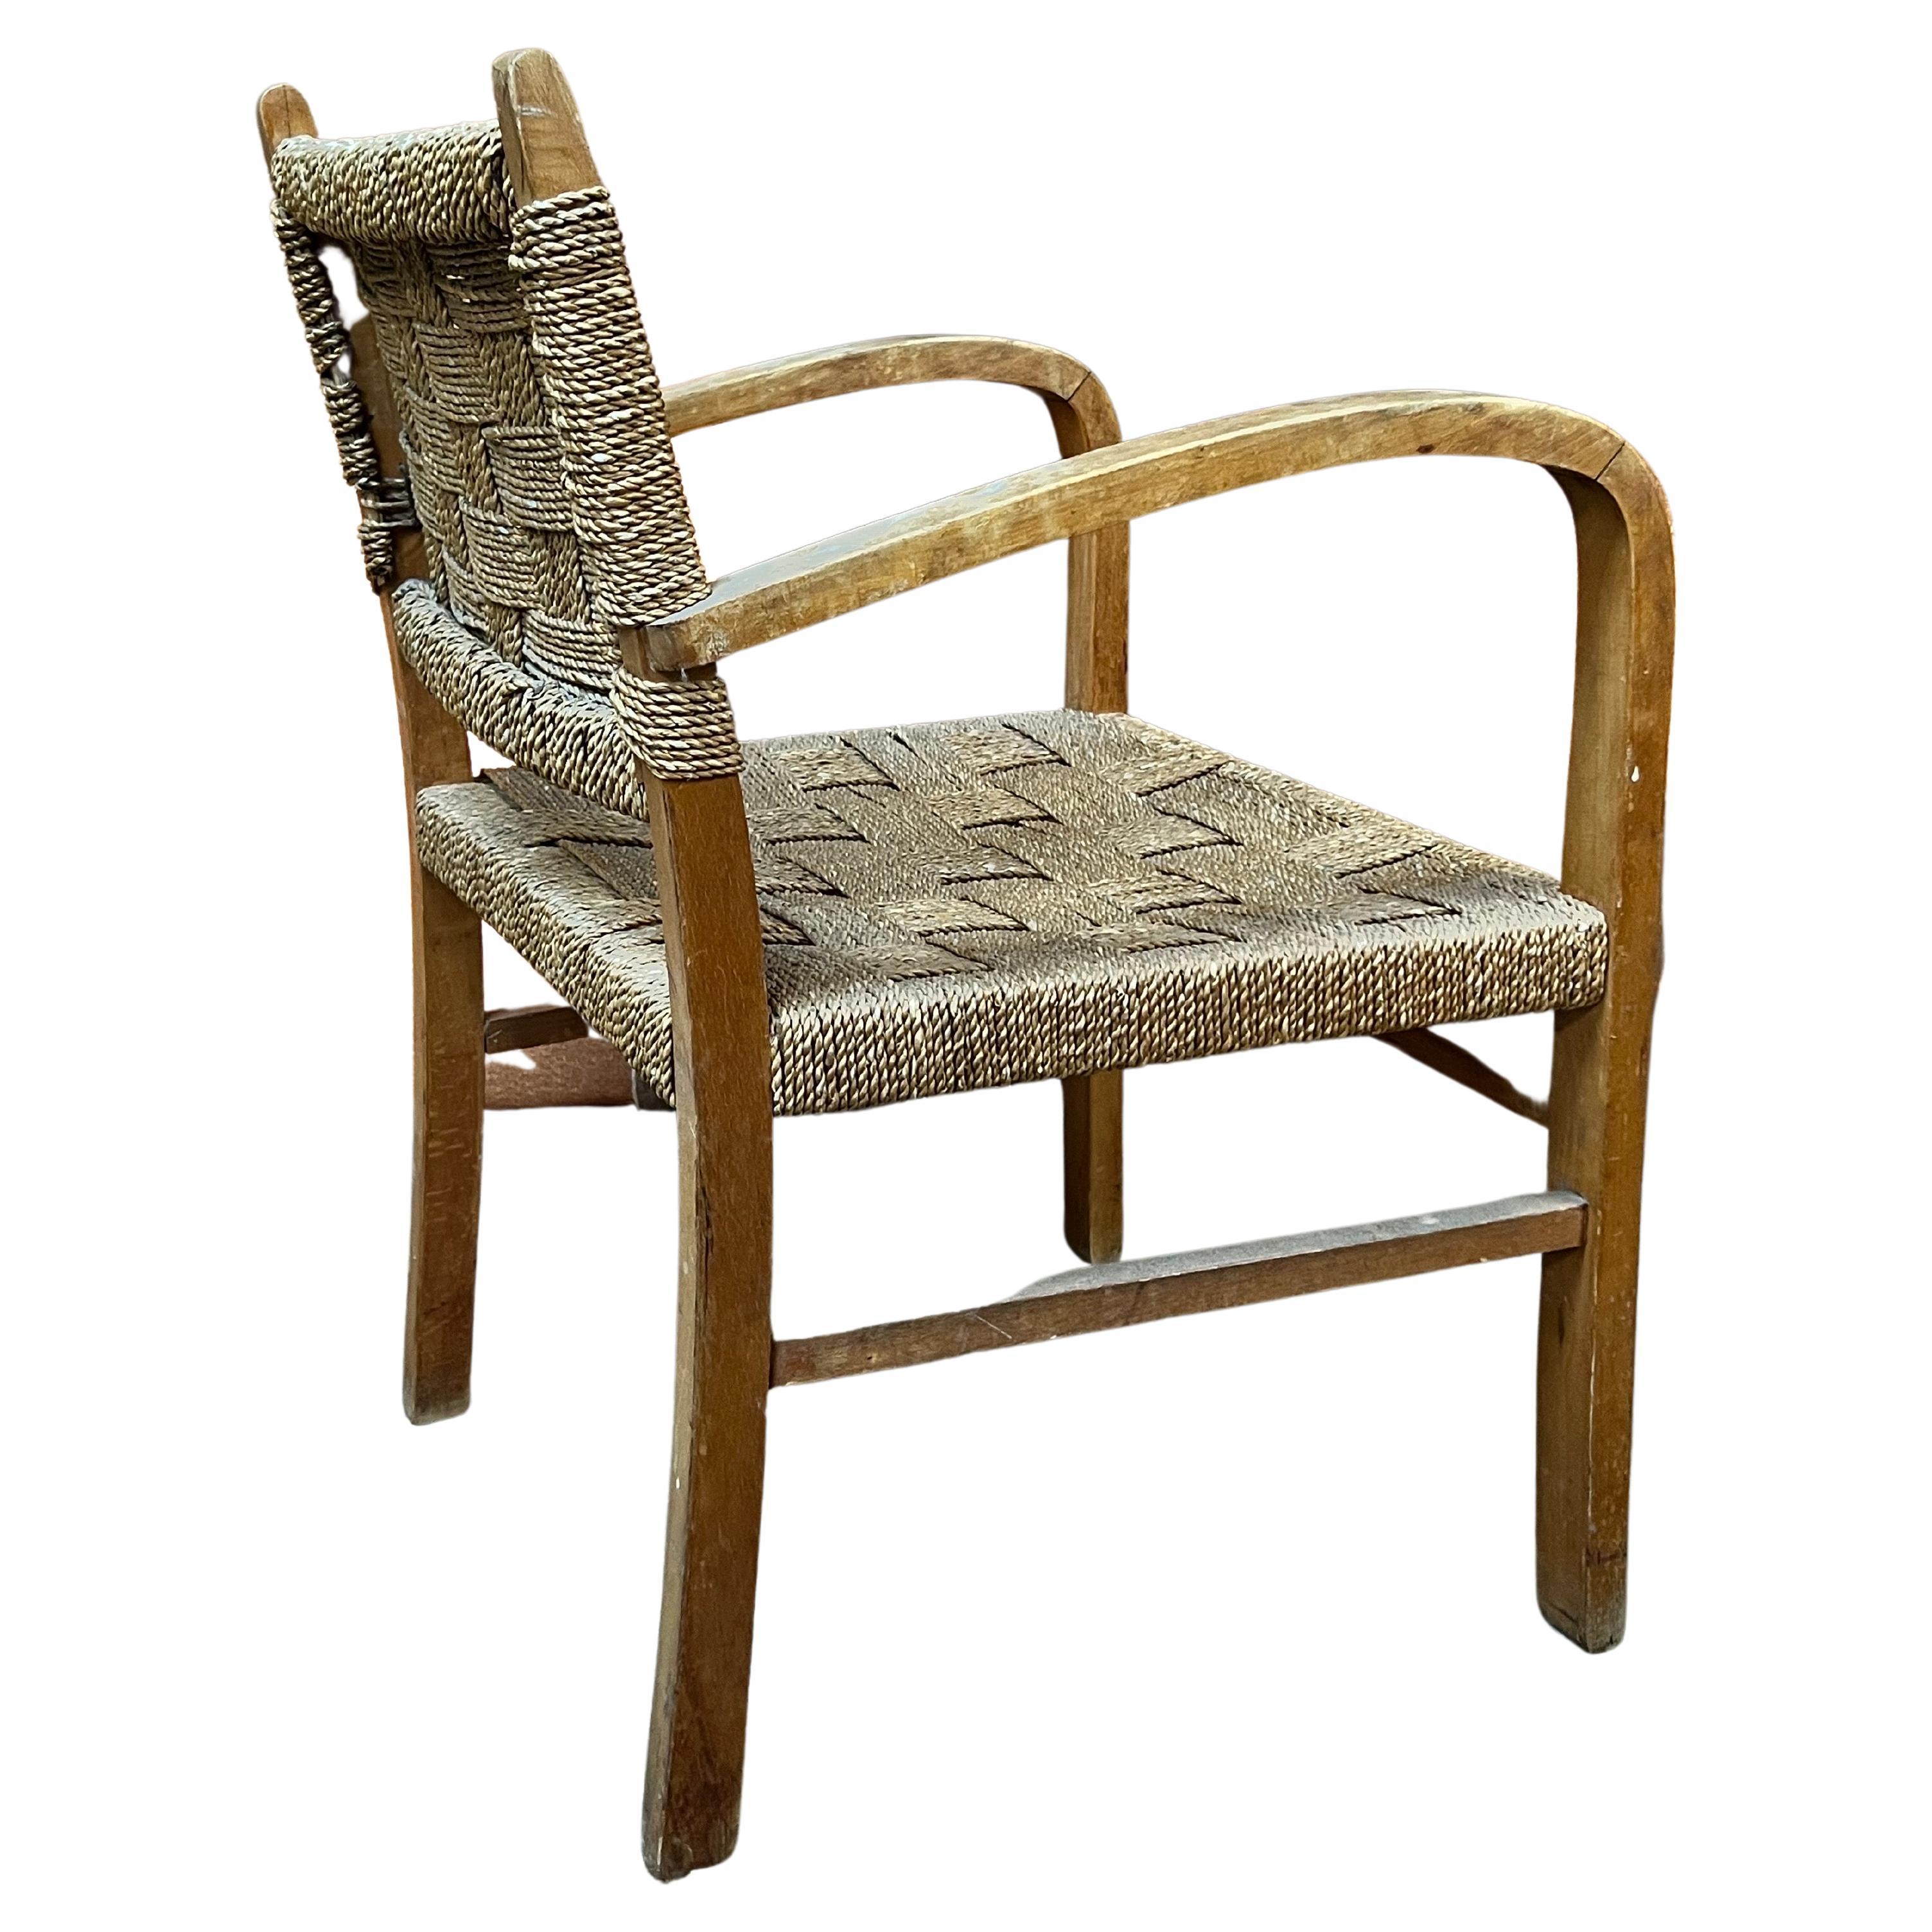 Erich Dieckmann Modernist Art Deco Rope Chair 1930s For Sale